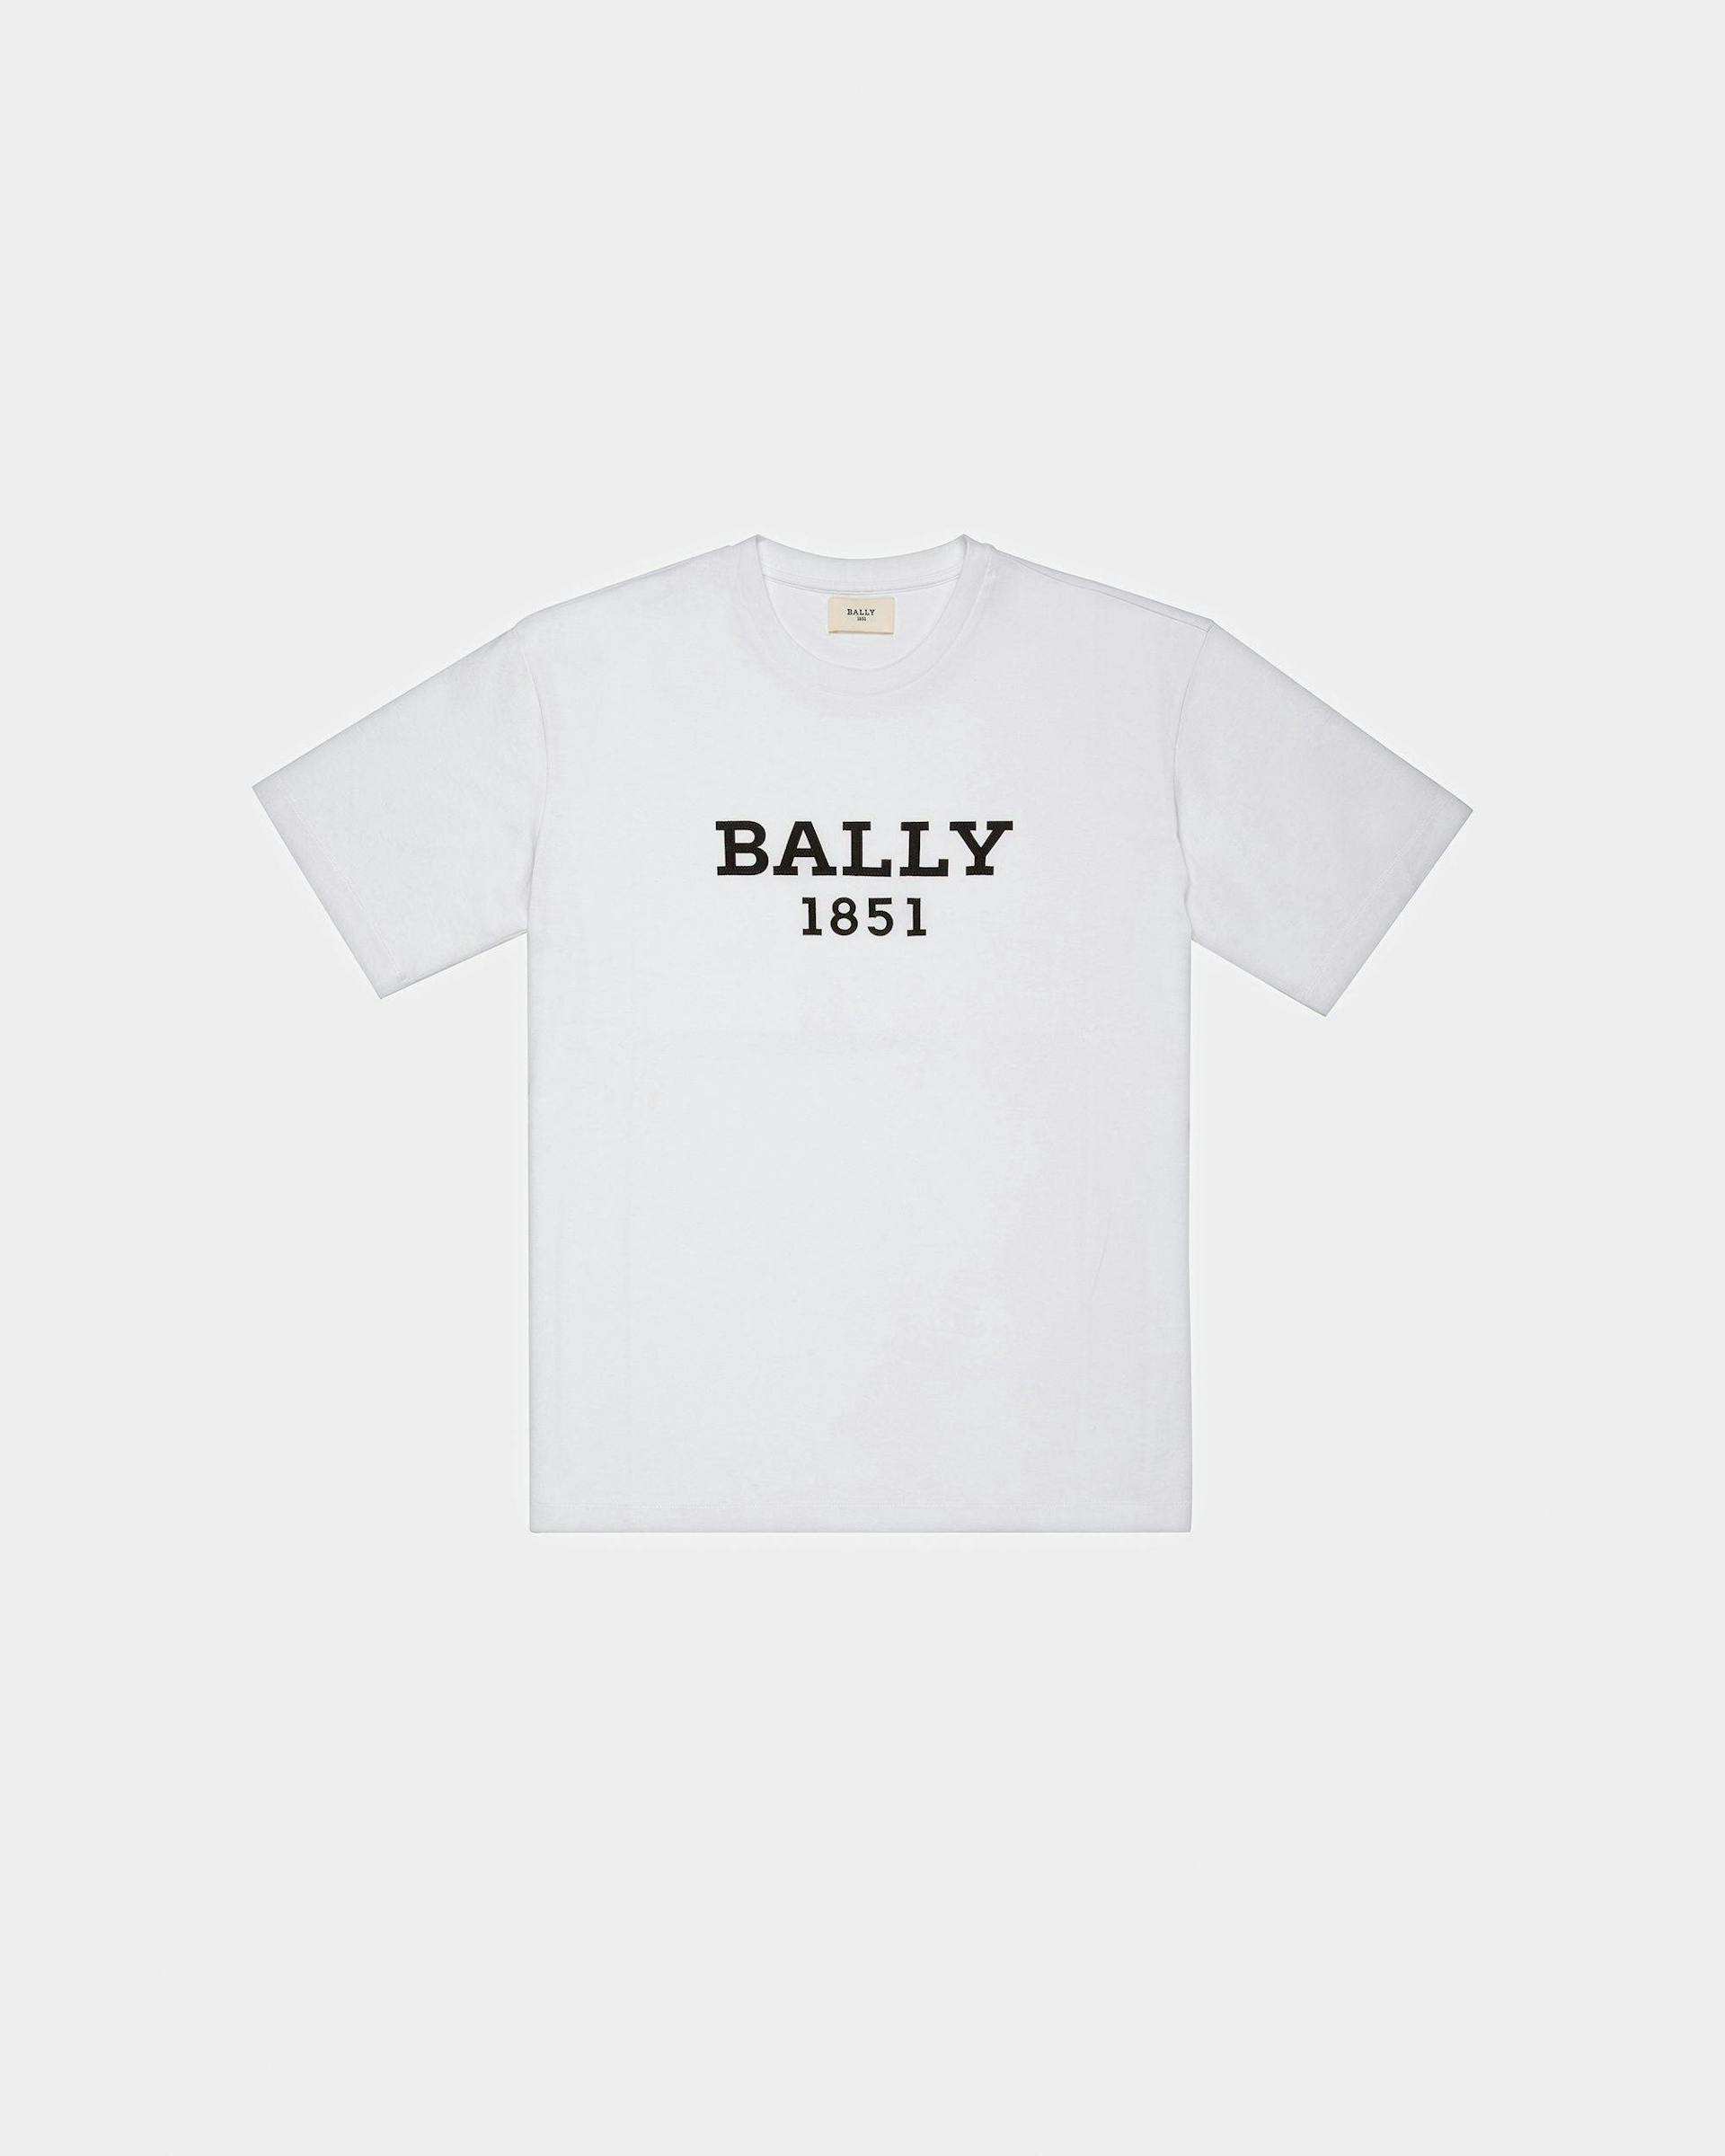 Bally 1851 T-Shirt - Bally